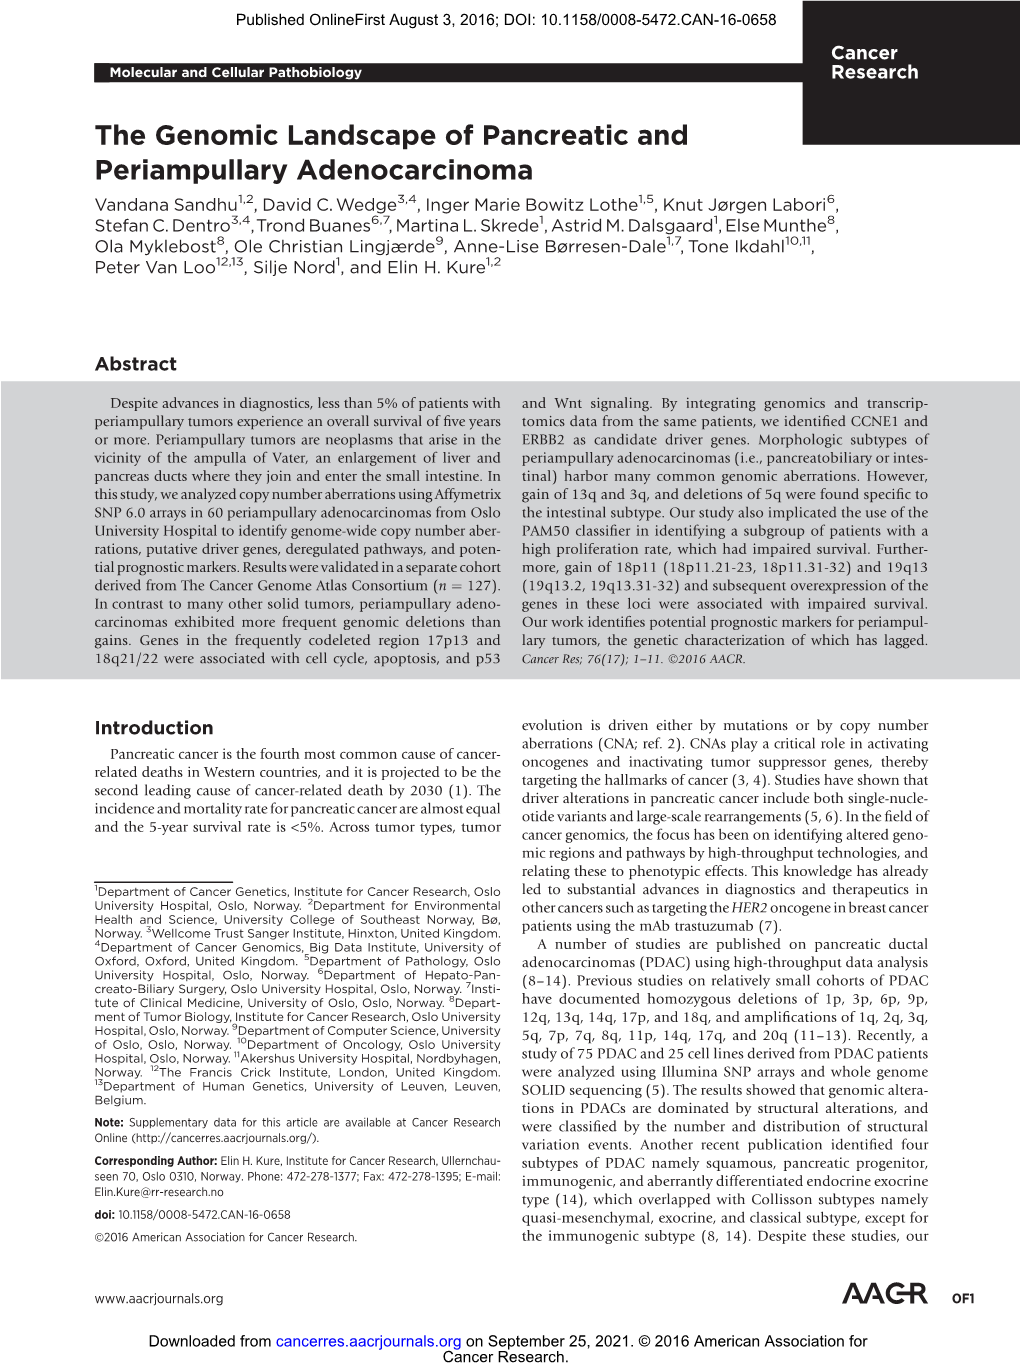 The Genomic Landscape of Pancreatic and Periampullary Adenocarcinoma Vandana Sandhu1,2, David C